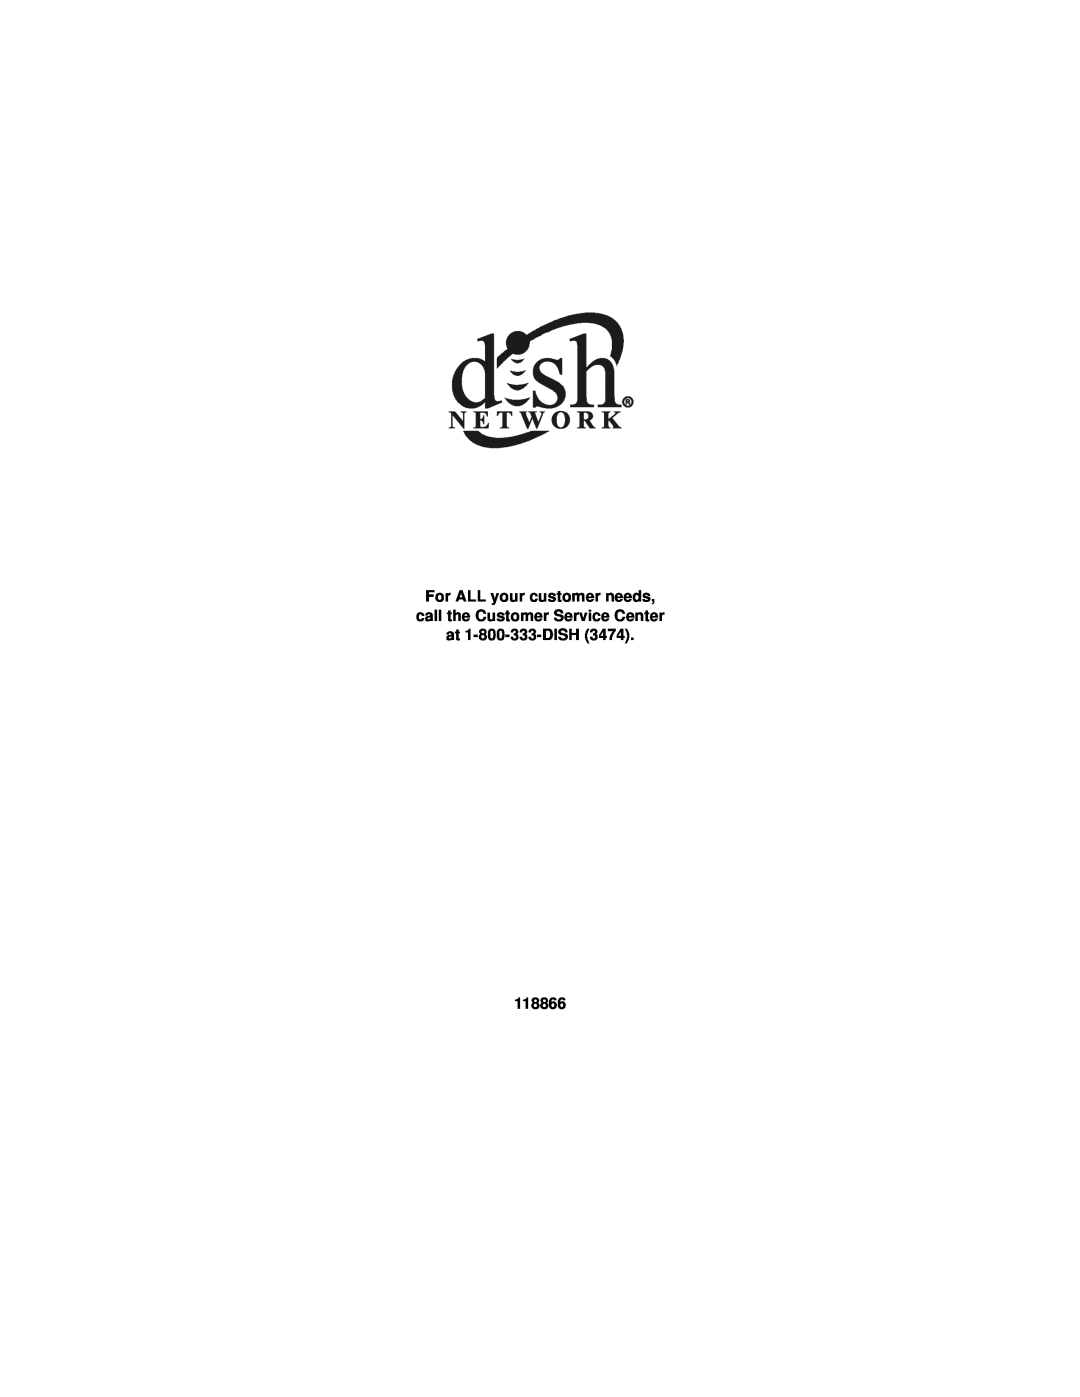 Dish Network EZ manual 118866 